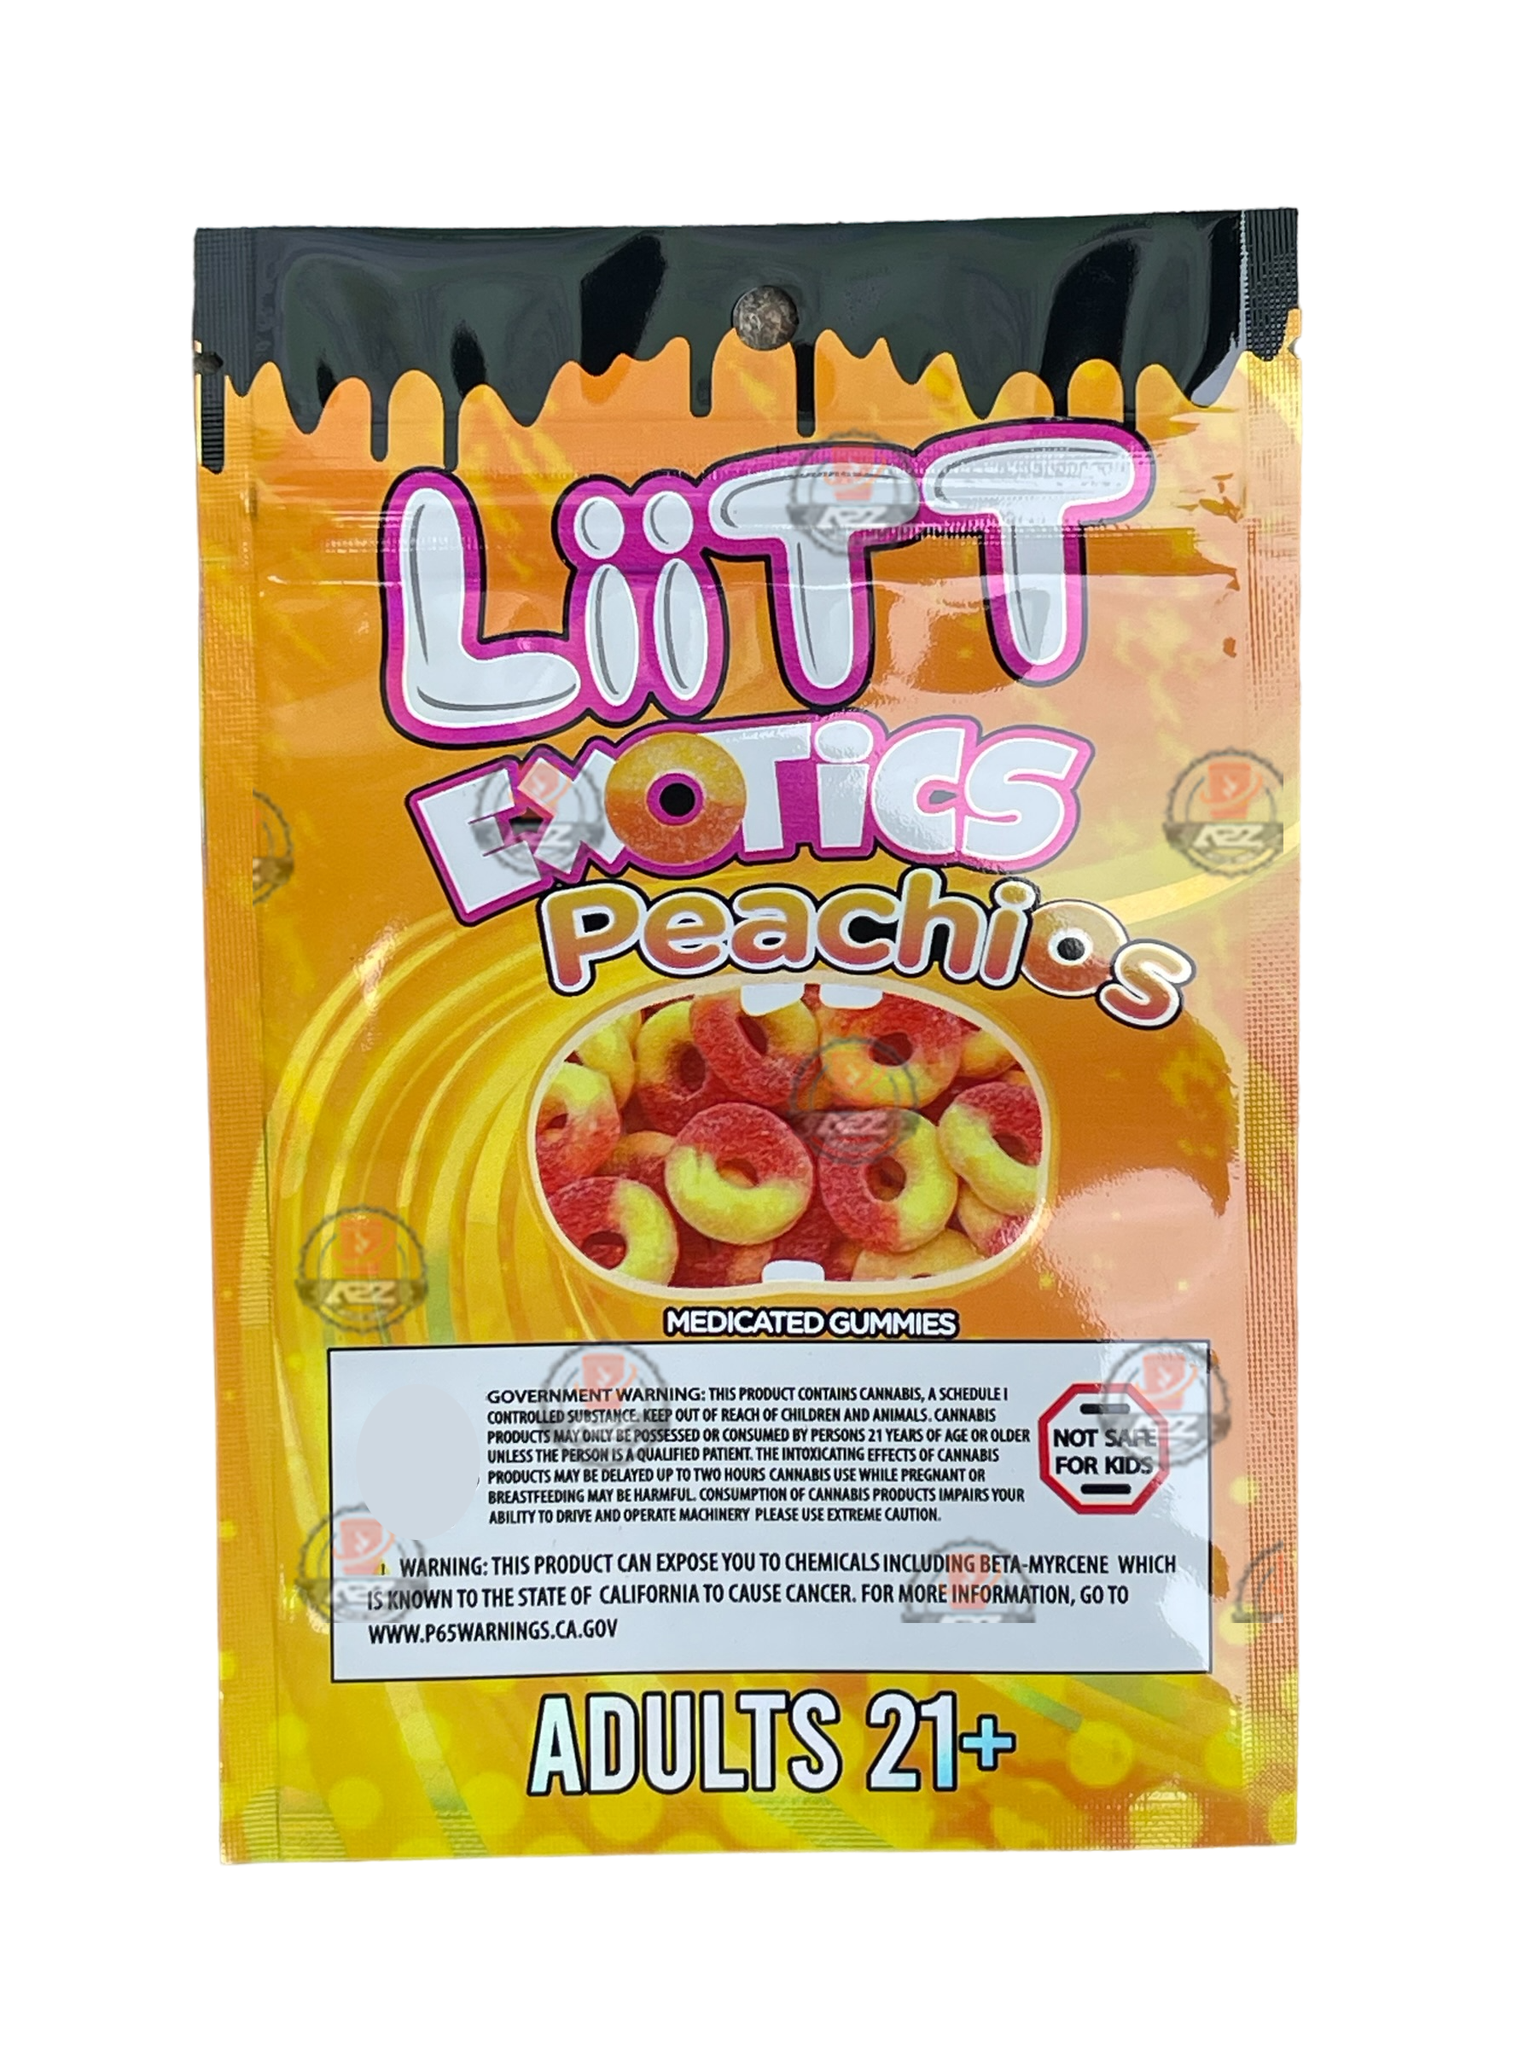 Liitt Exotics Peachios 3.5g Mylar Bag 1000MG (Packaging Only)